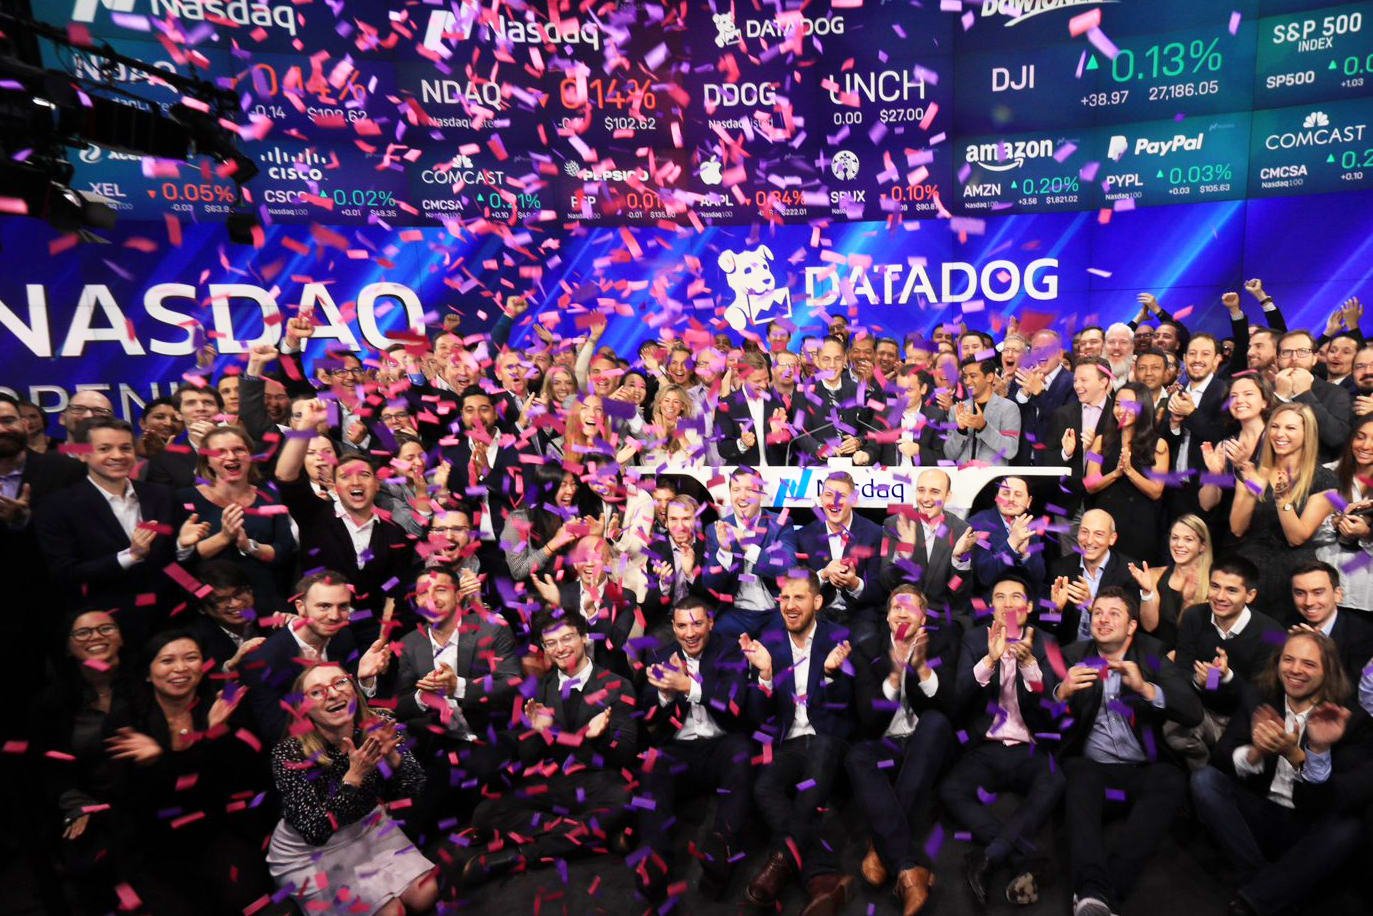 The Datadog team at NASDAQ celebrating on IPO day